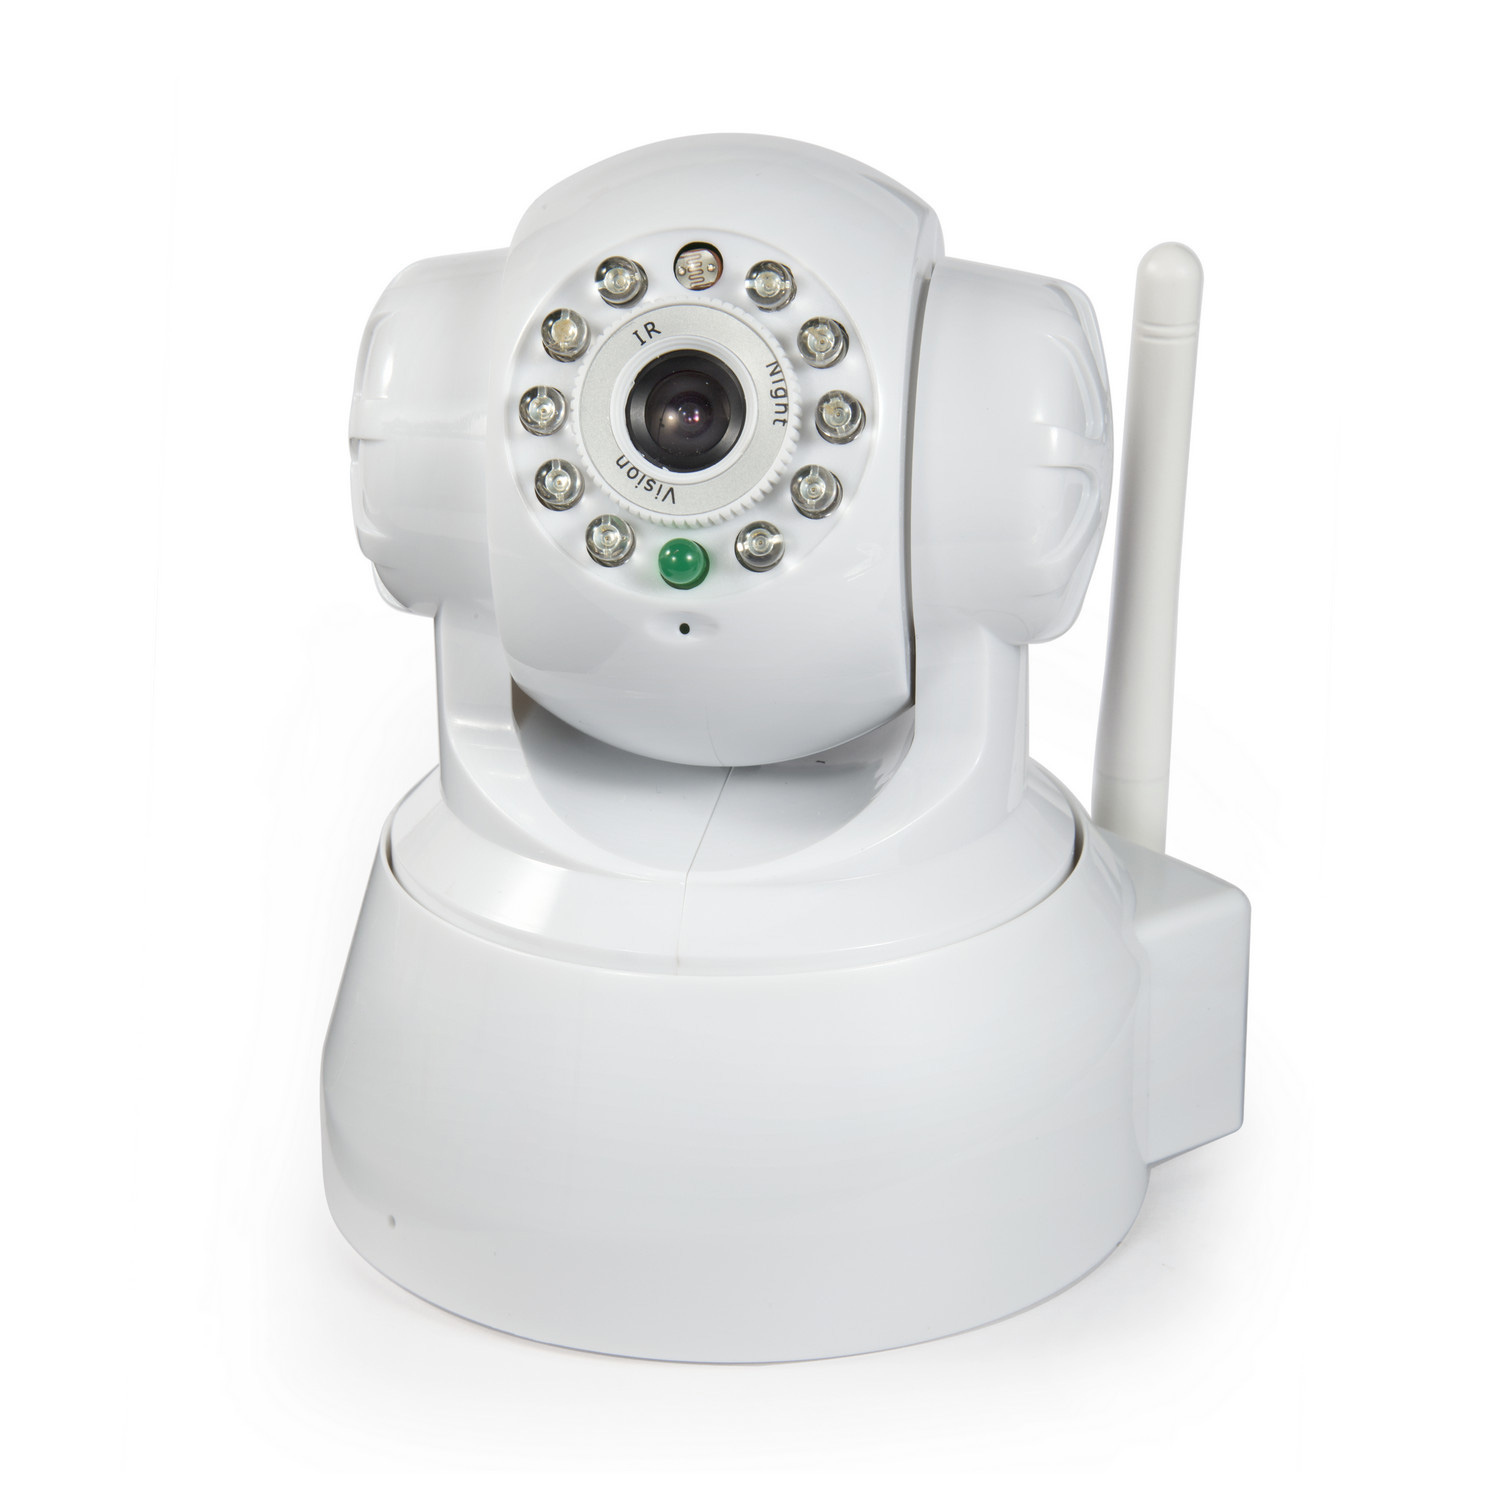 P2P Wireless IP Camera (ALY001)